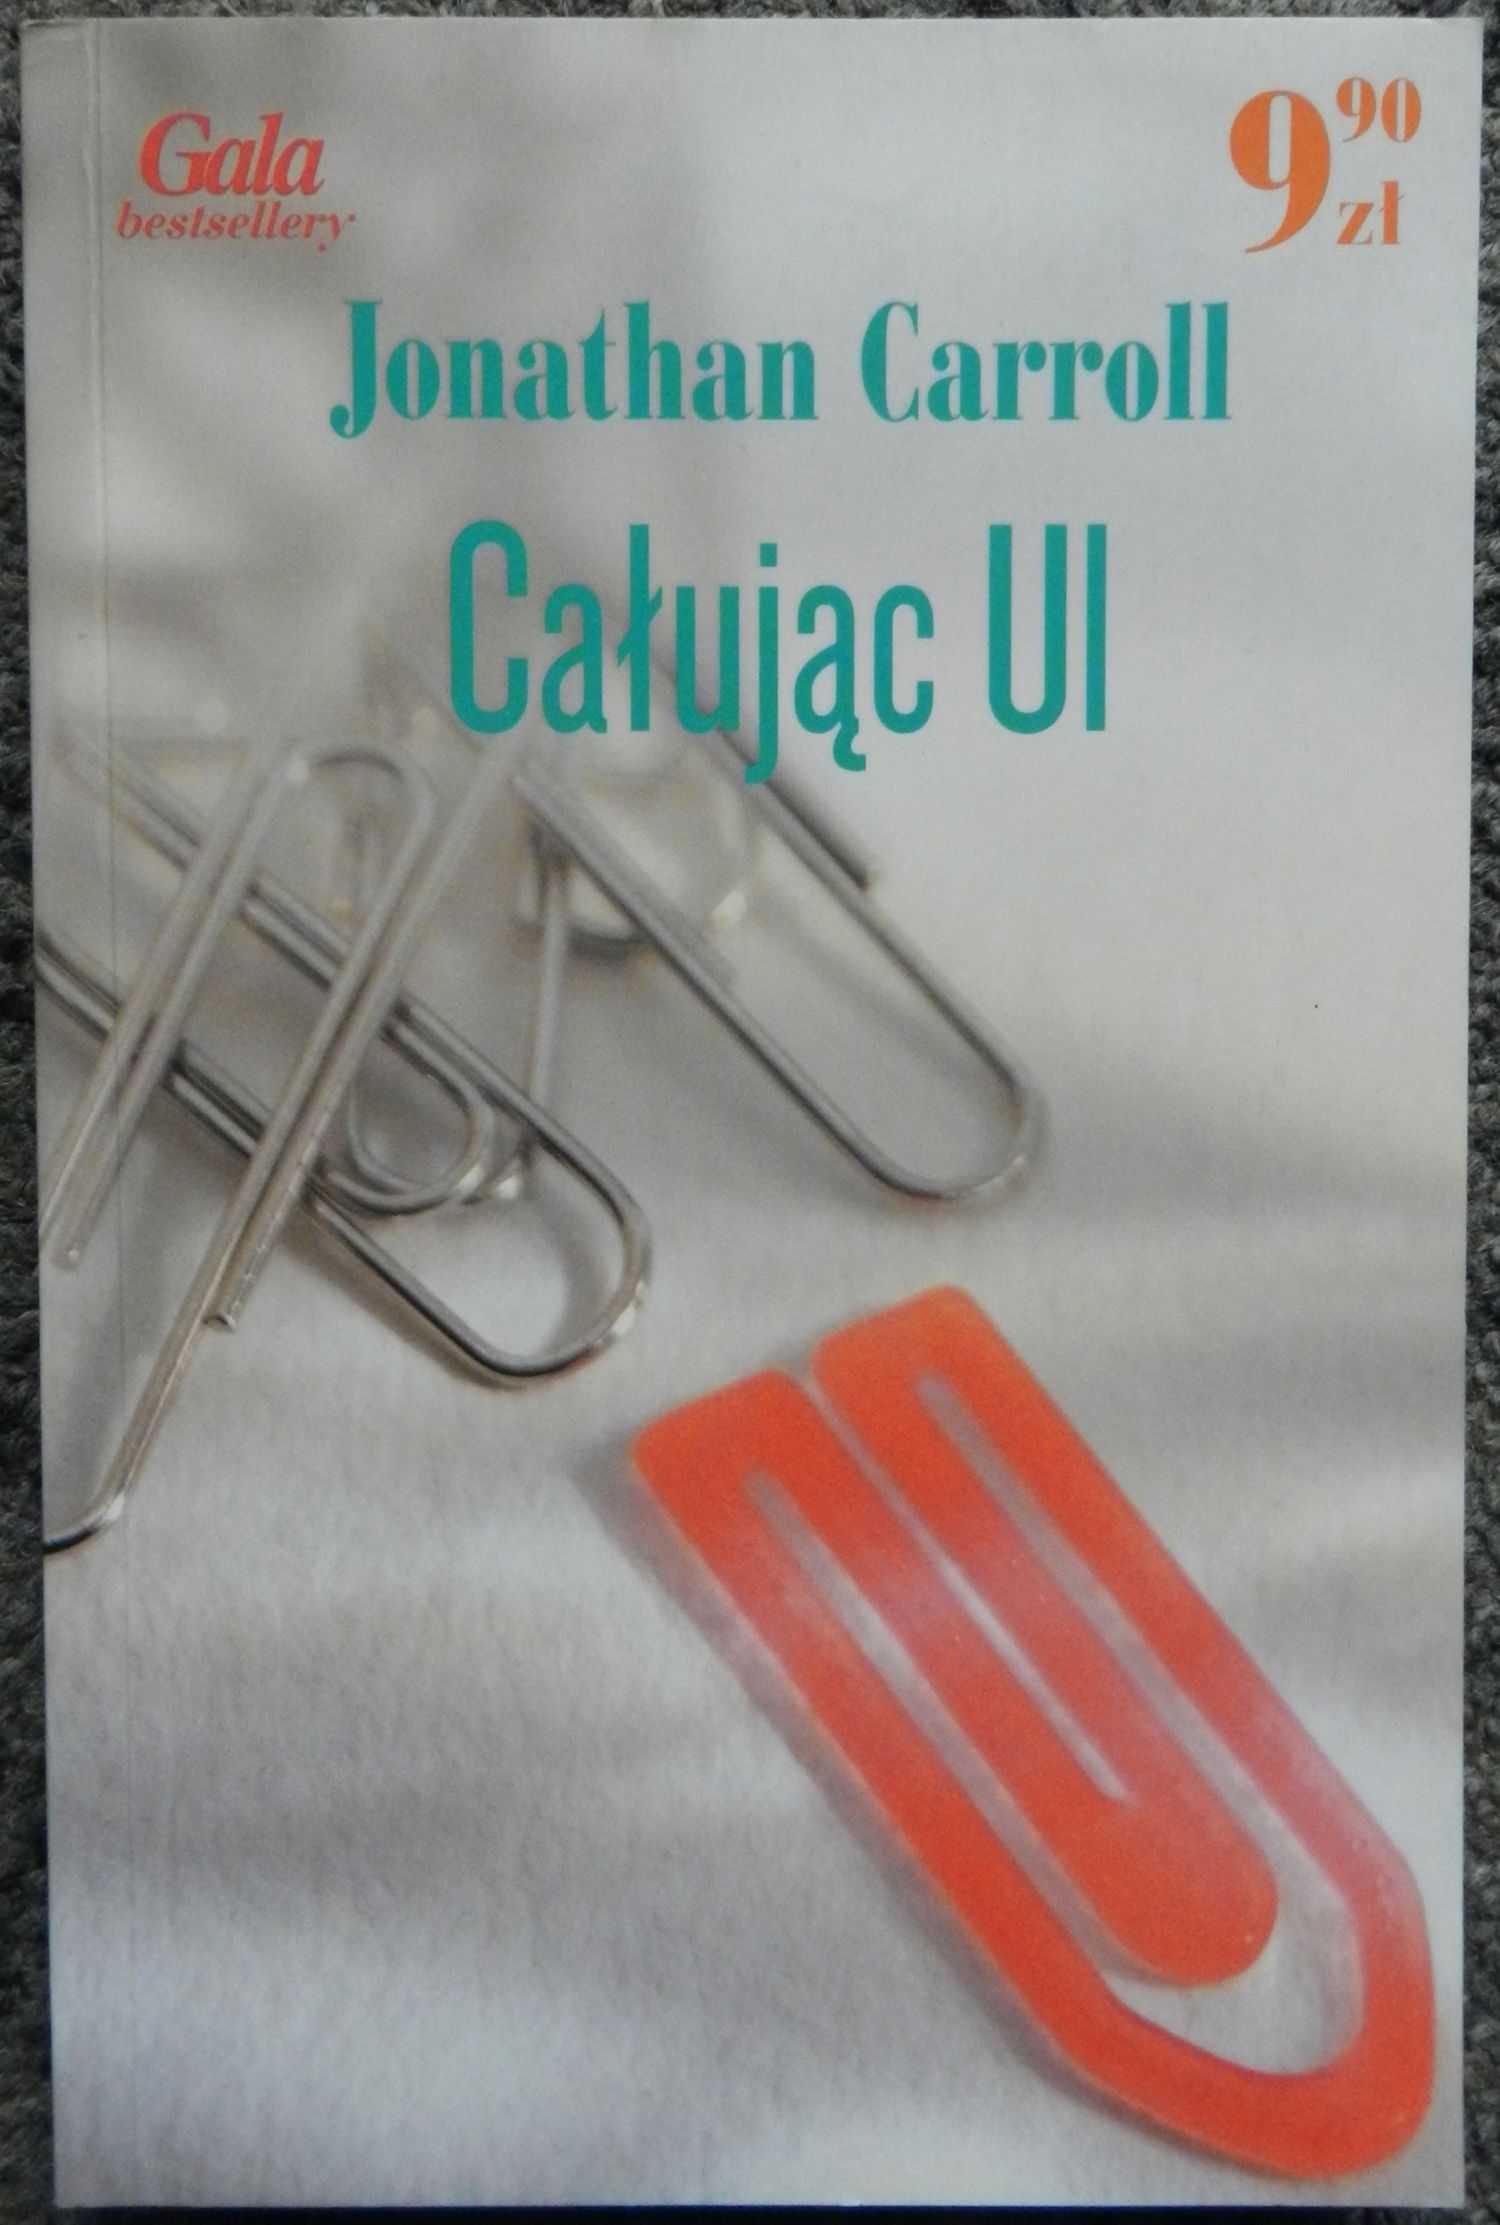 Carroll Jonathan - Całując ul, Literatura w szpilkach